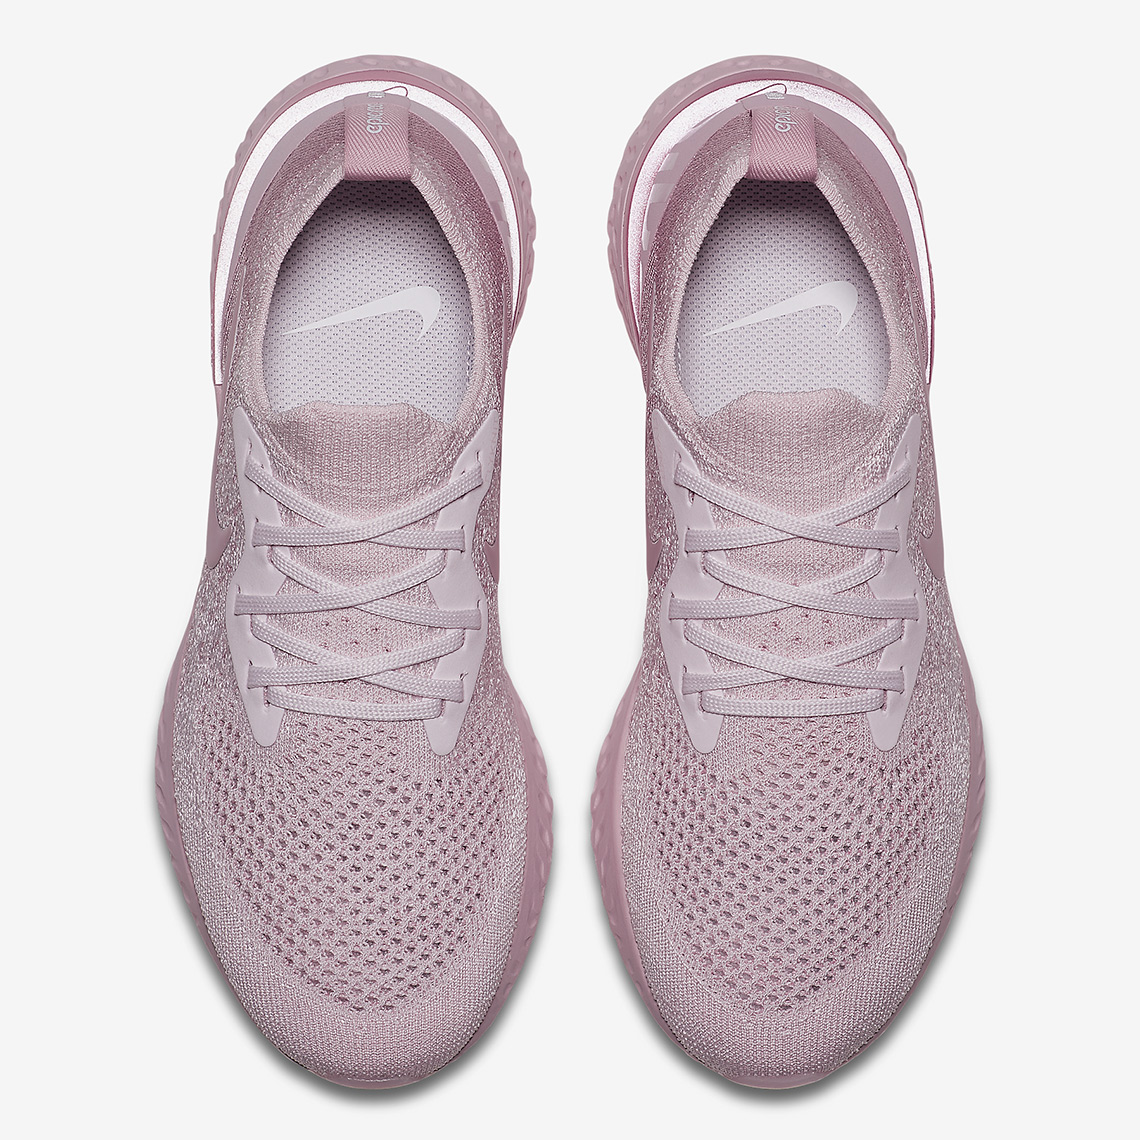 nike epic react flyknit pearl pink women's running shoe